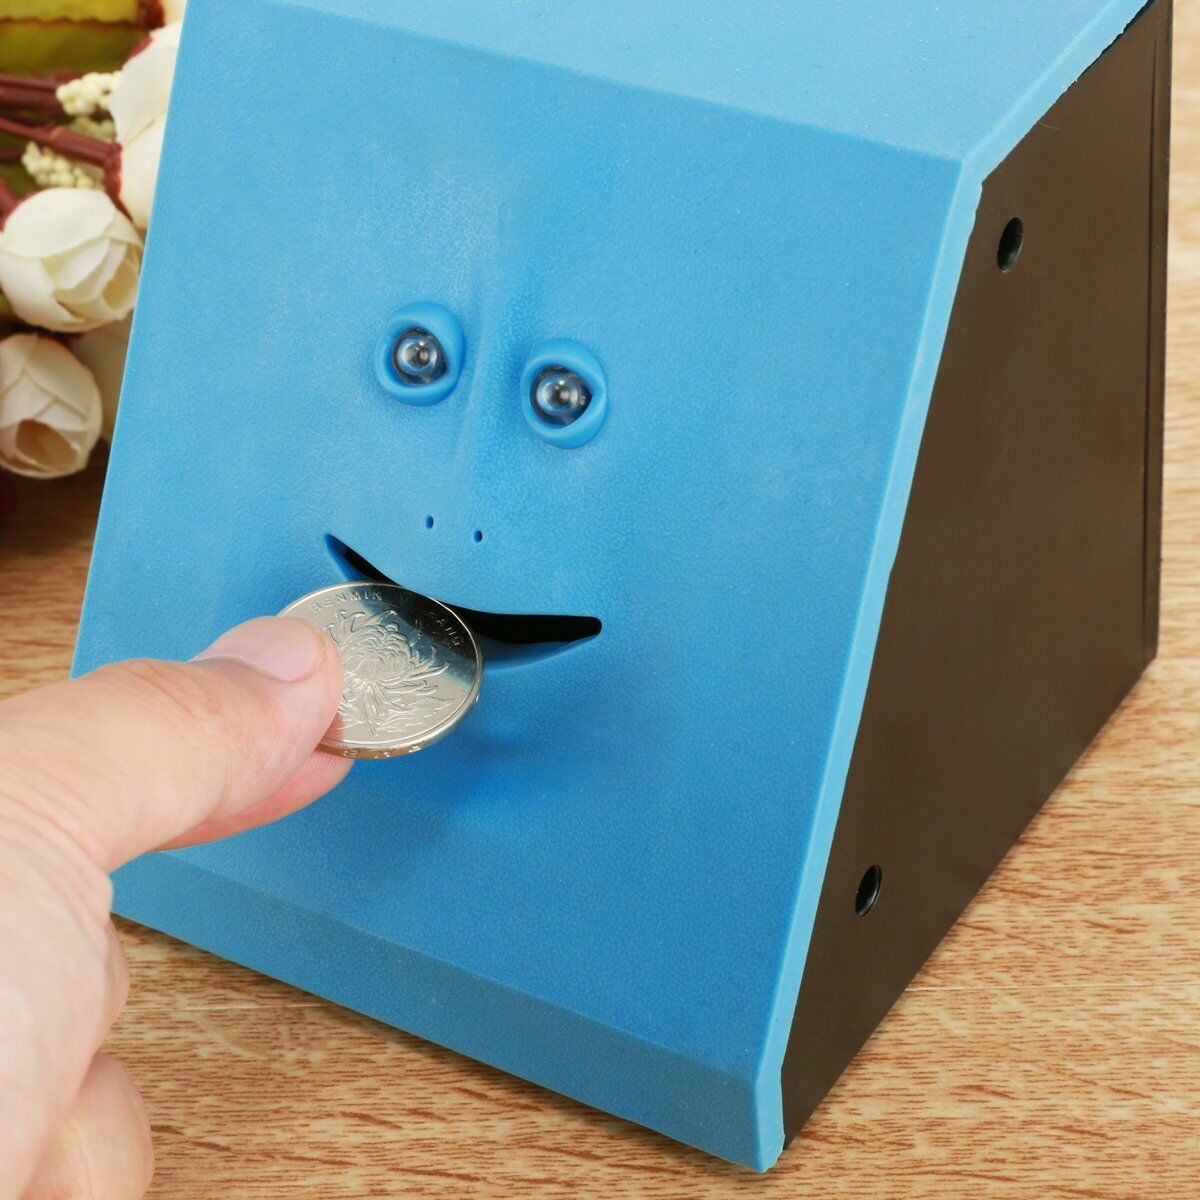 Funny Facebank Sensor Face Bank Saving Eating Money Coin Box Bank For Kids Gifts